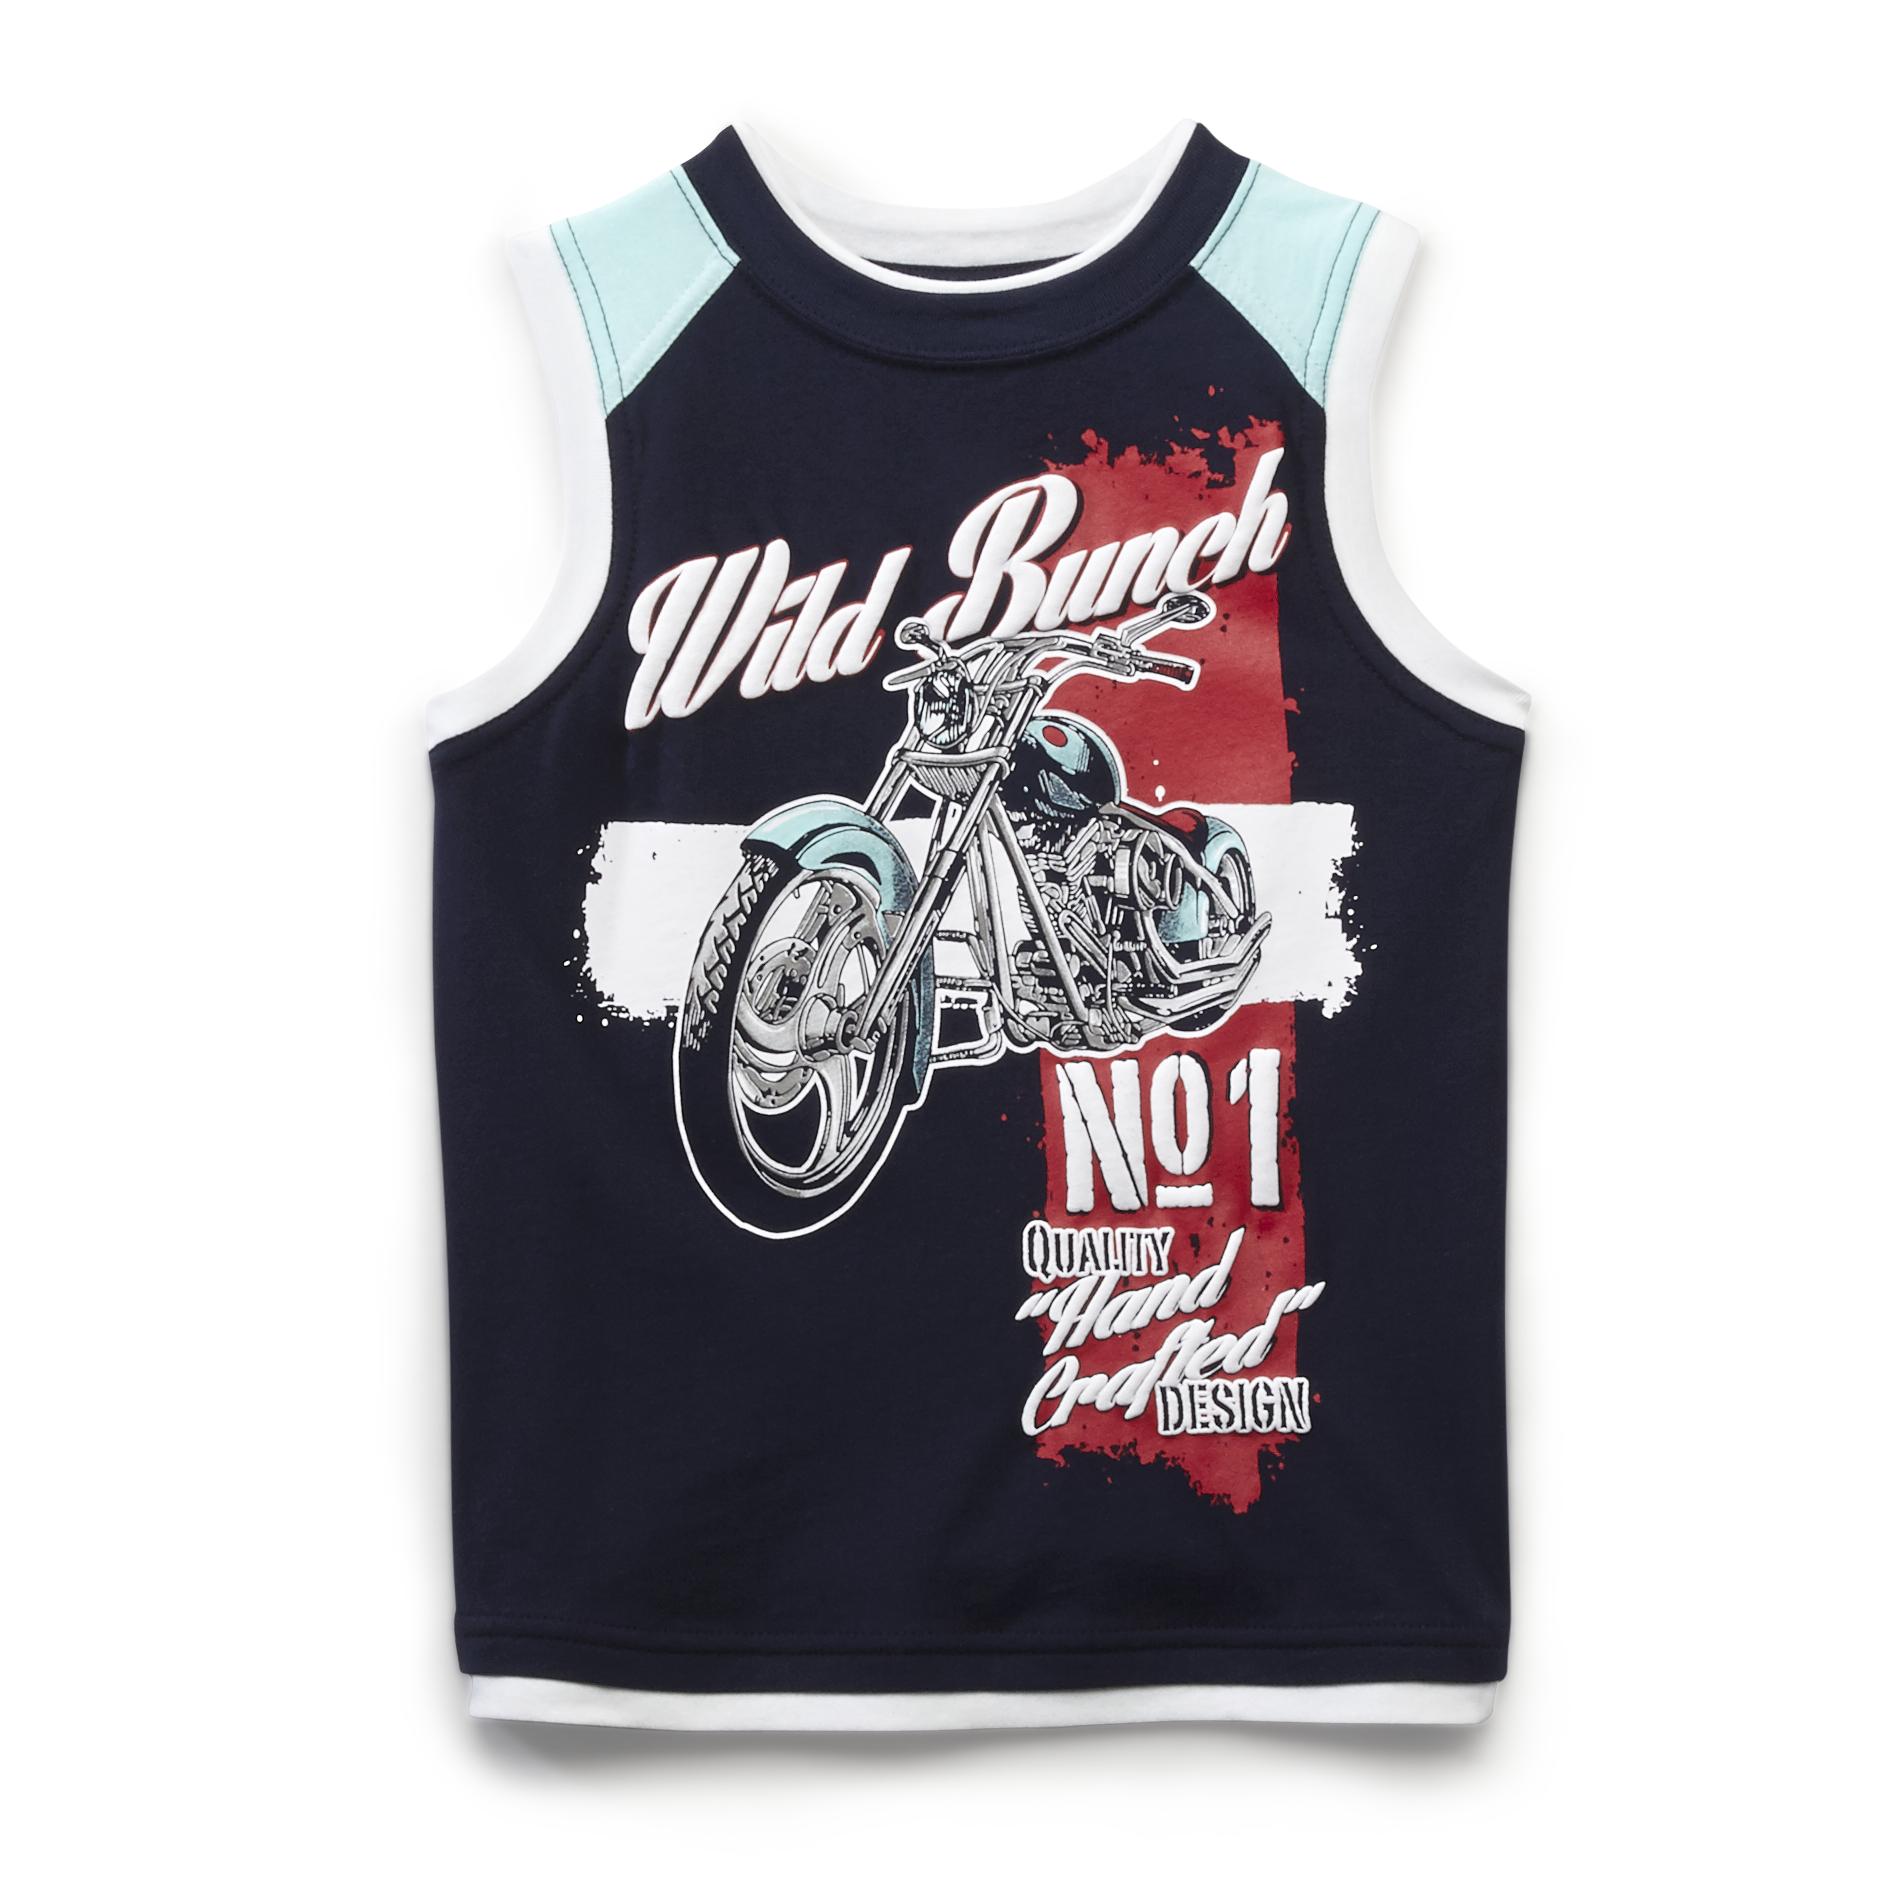 Toughskins Boy's Sleeveless Graphic T-Shirt - Motorcycle